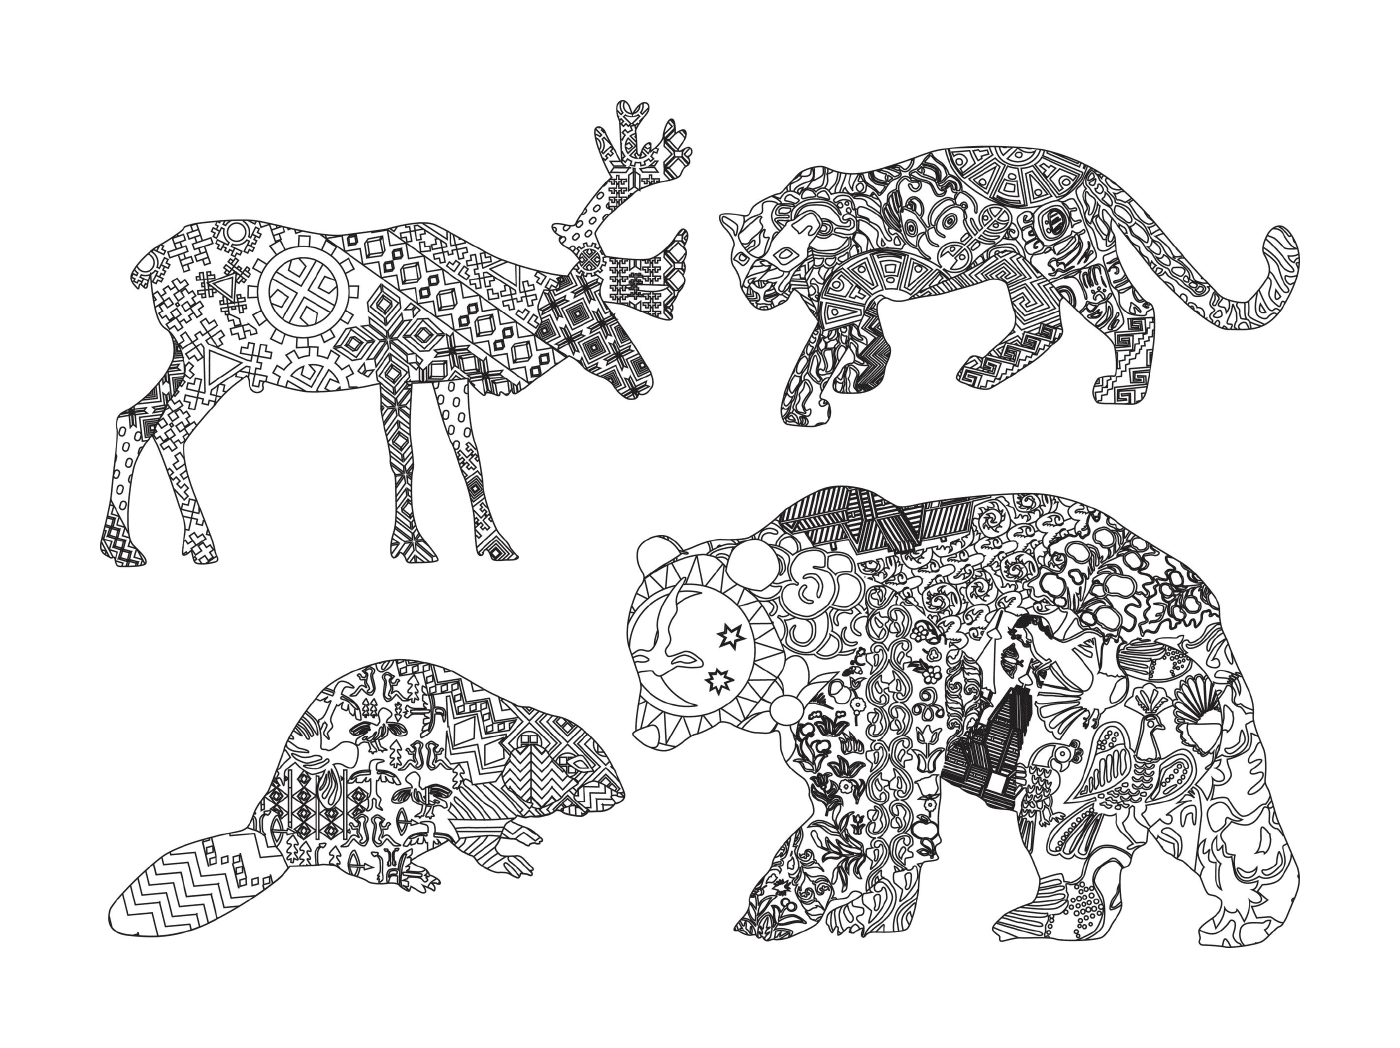  Grupo de animales dibujados con motivos 